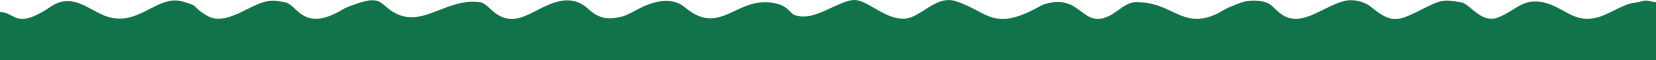 bcateam green banner